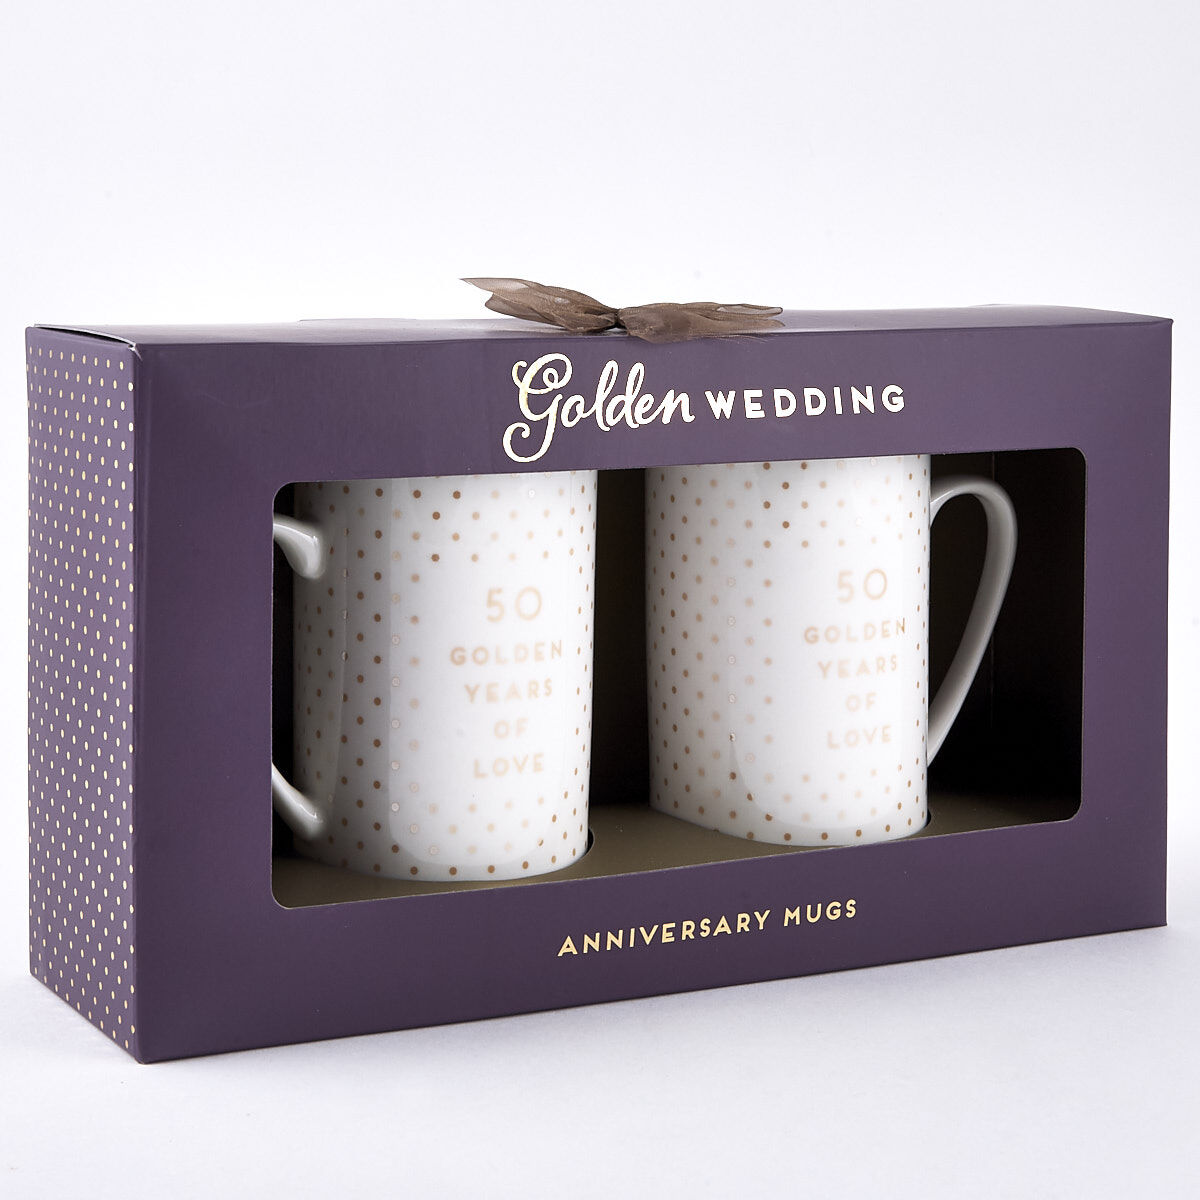 Buy Golden Wedding 50th Anniversary Mugs for GBP 5.99 | Card